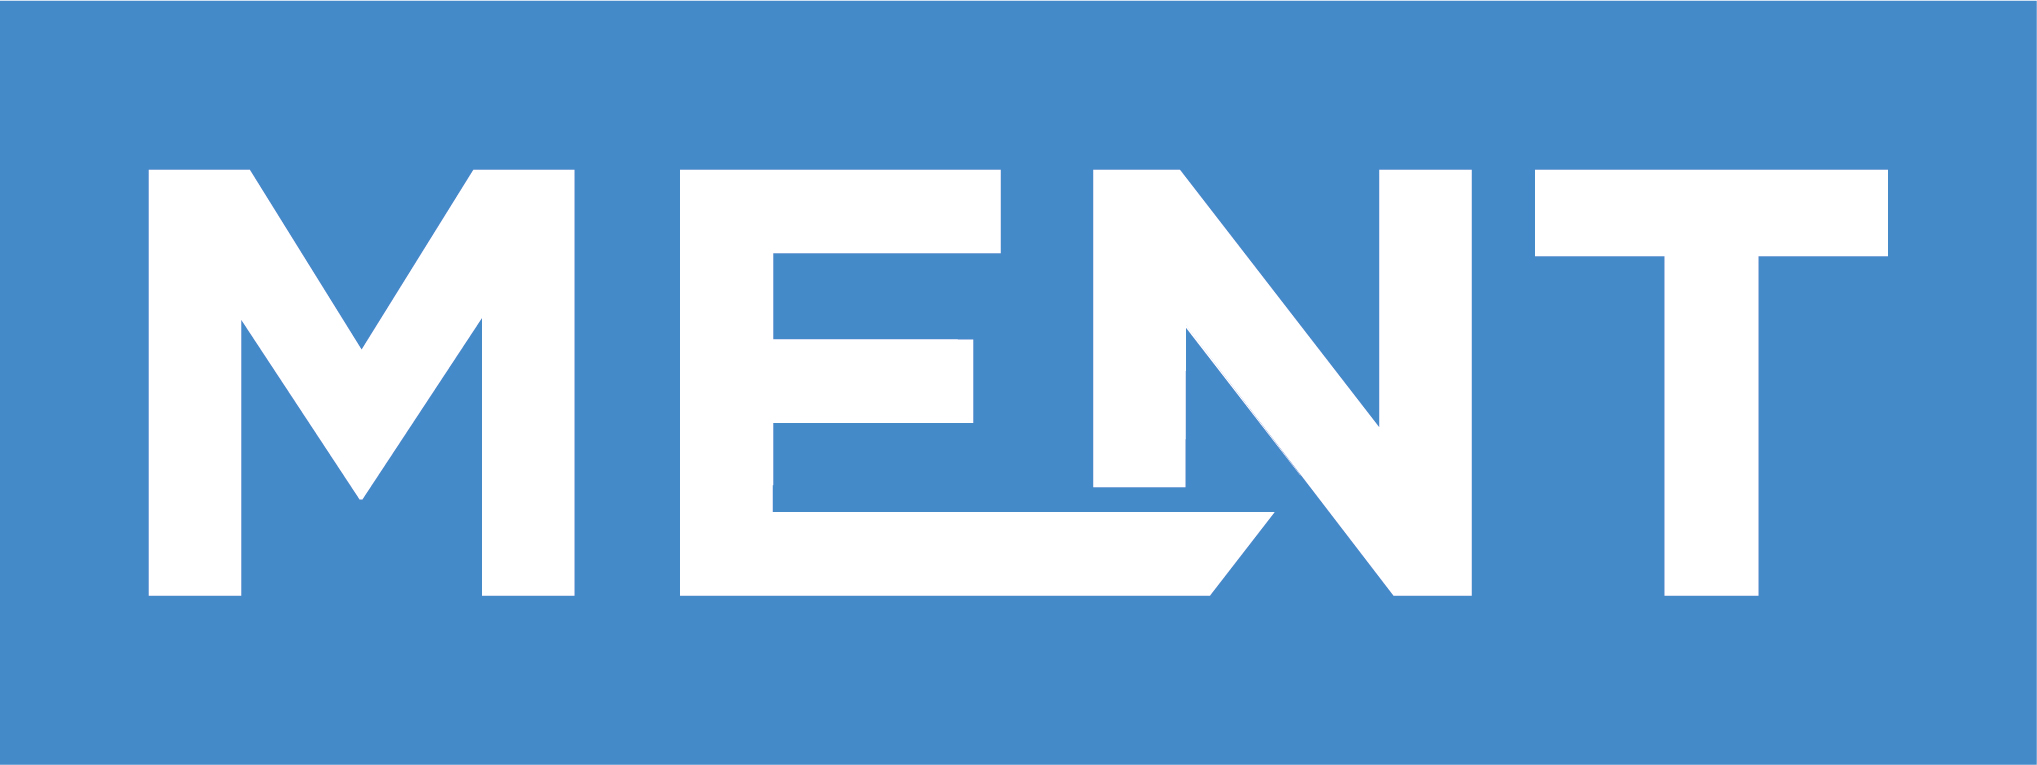 Ing. R. Ment AG Logo